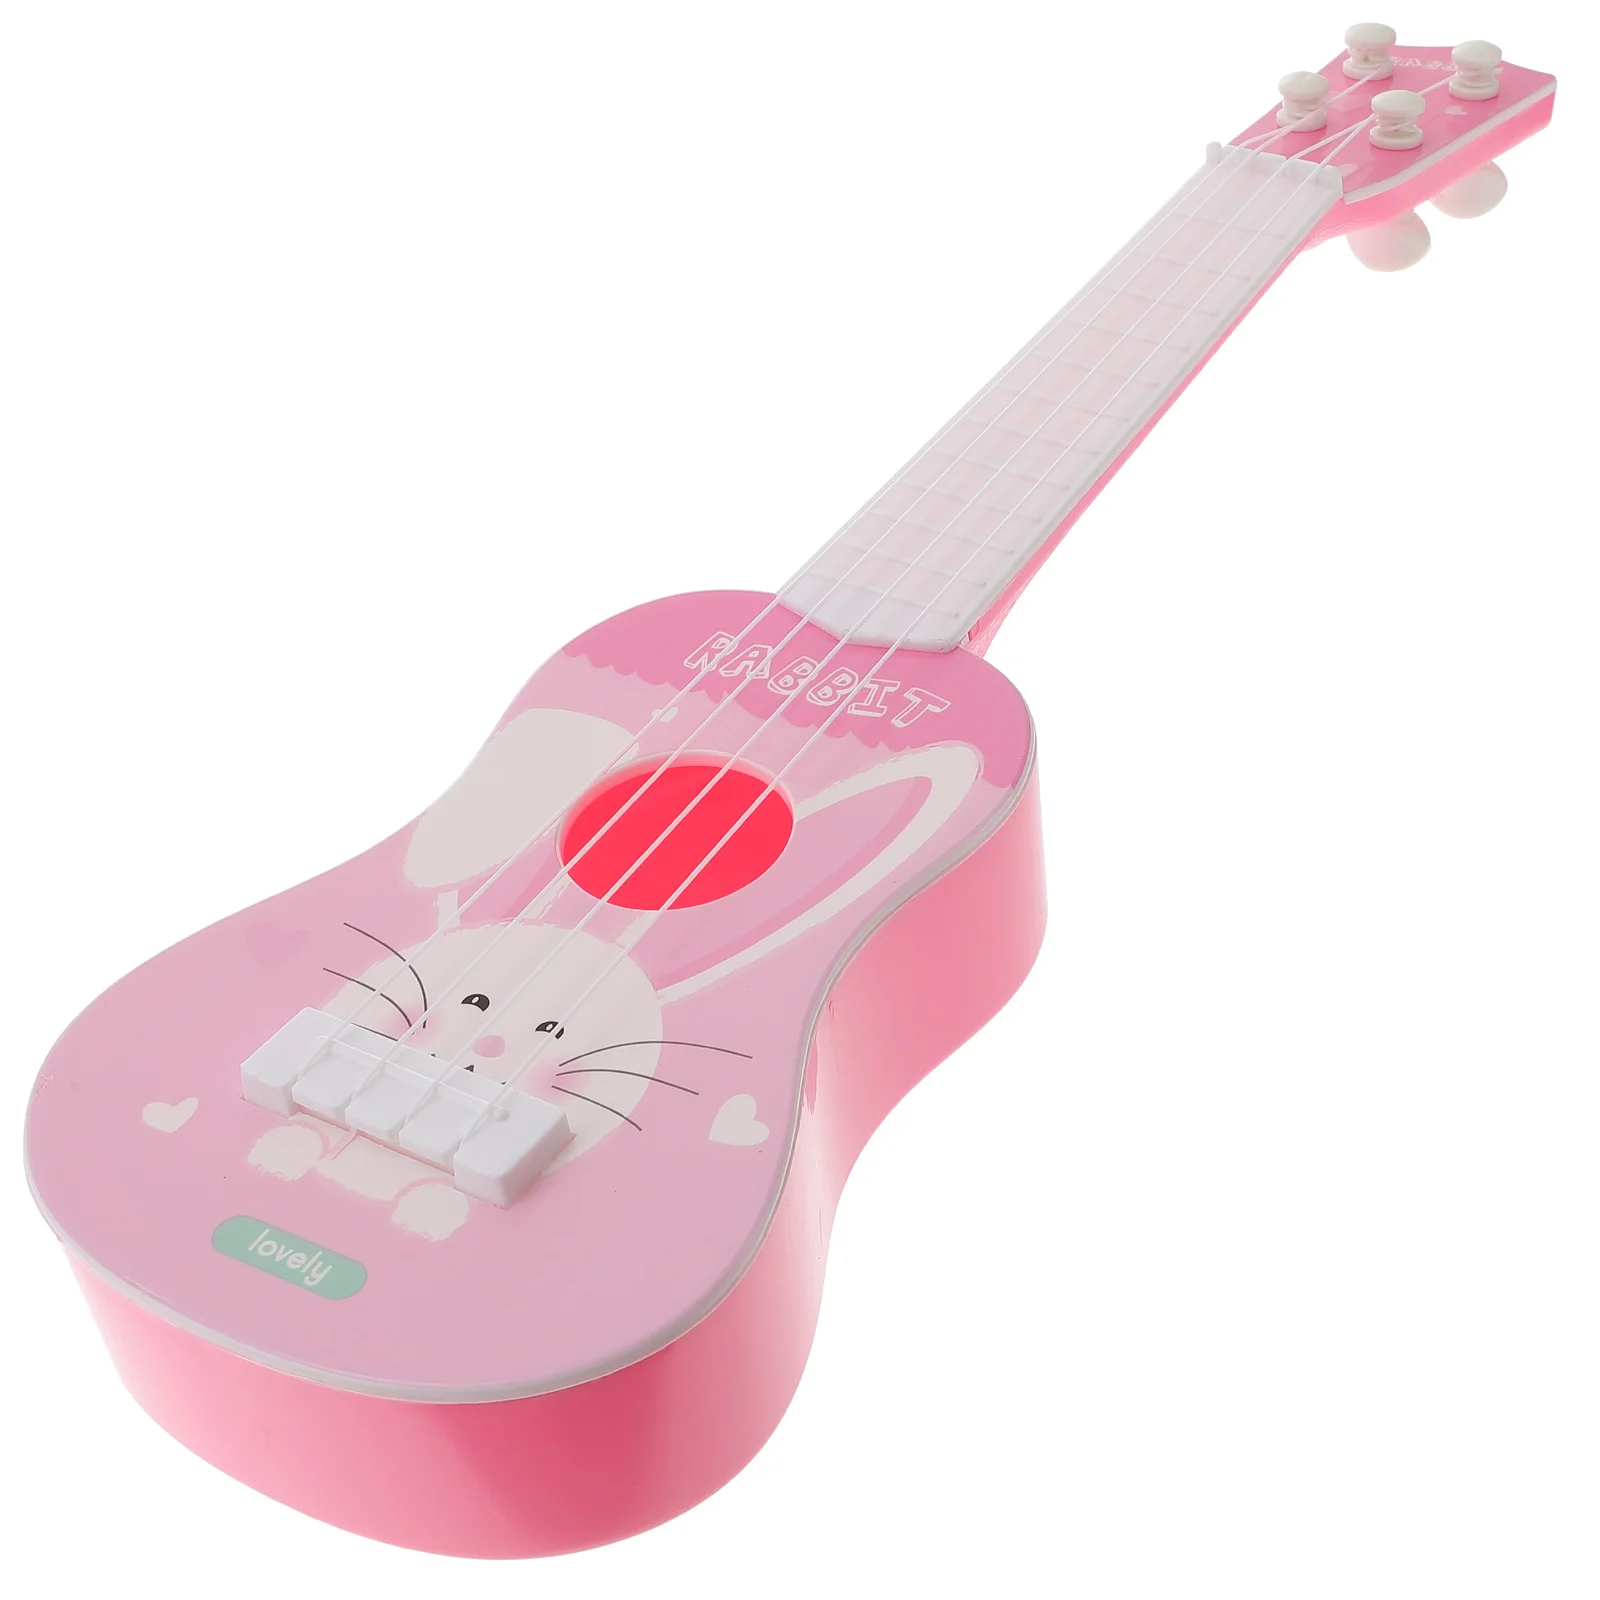 

Kids Guitar 4 String Ukulele Rabbit Guitar Musical Instruments Educational Playing for Starter Beginner